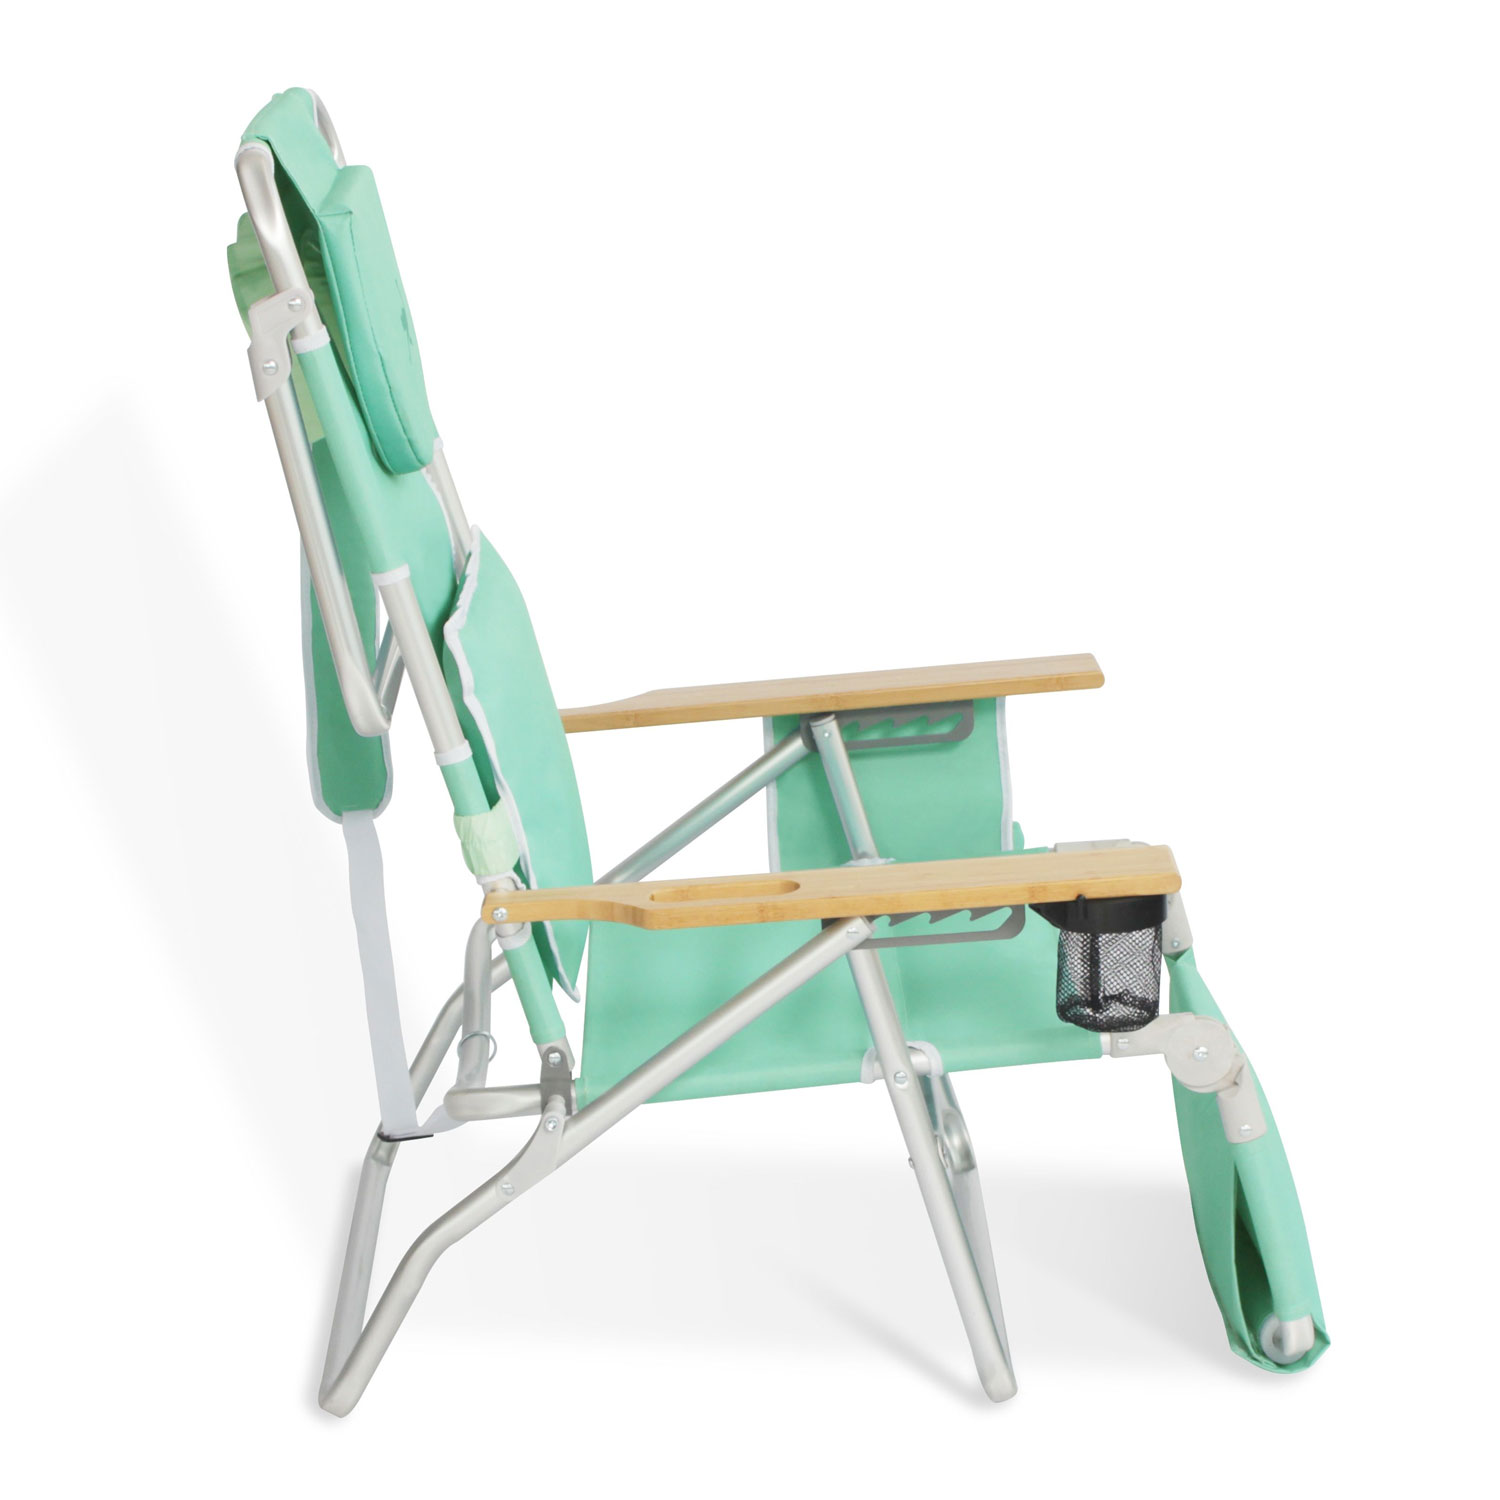 Minimalist Ostrich Beach Chair Parts with Simple Decor